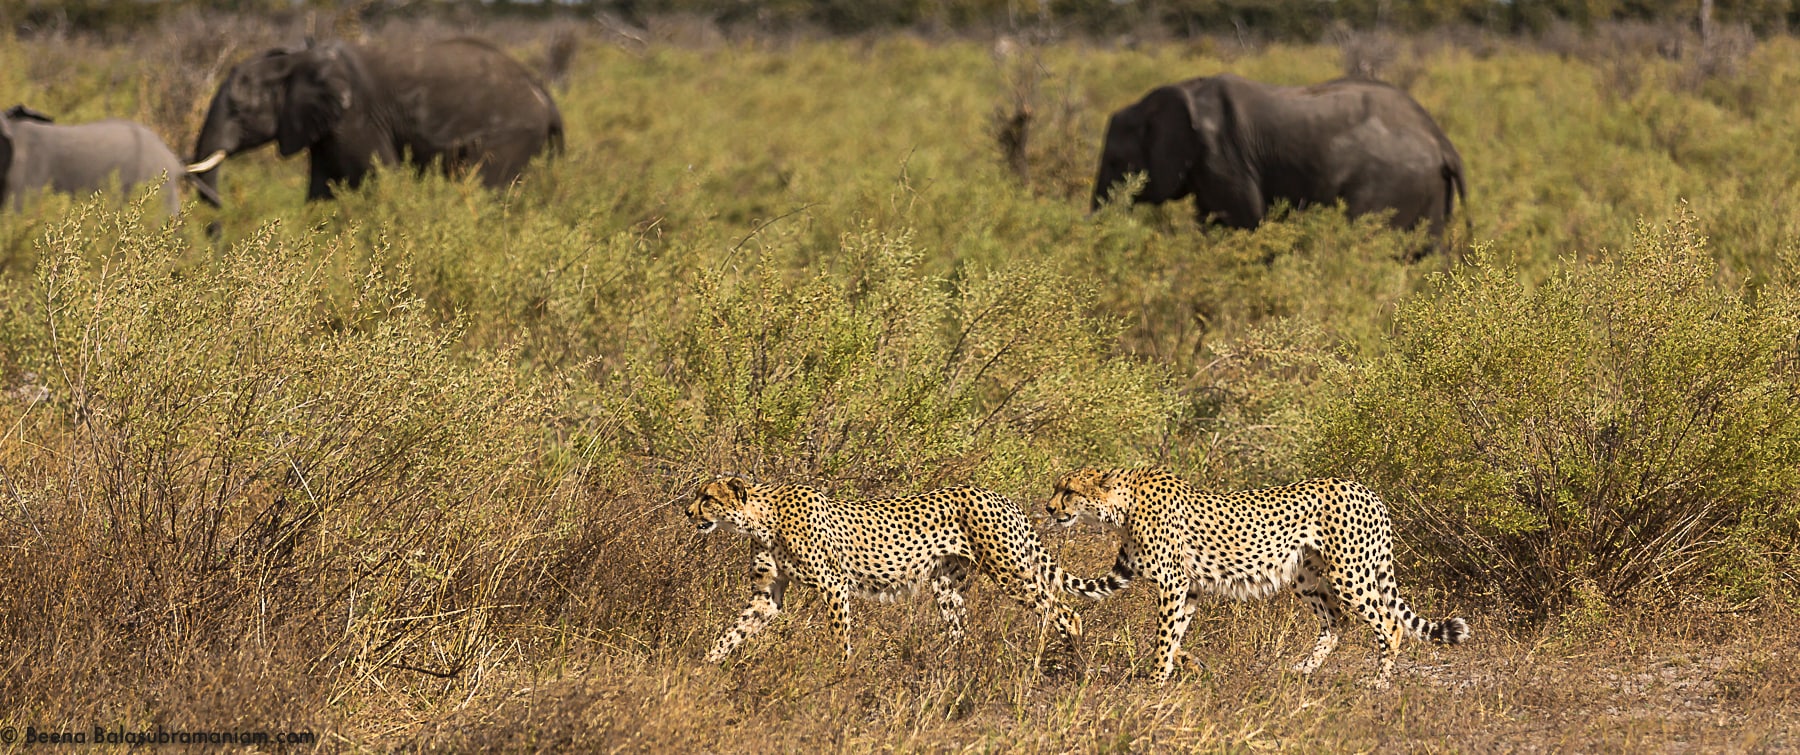 Cheetahs in the company of Elephants